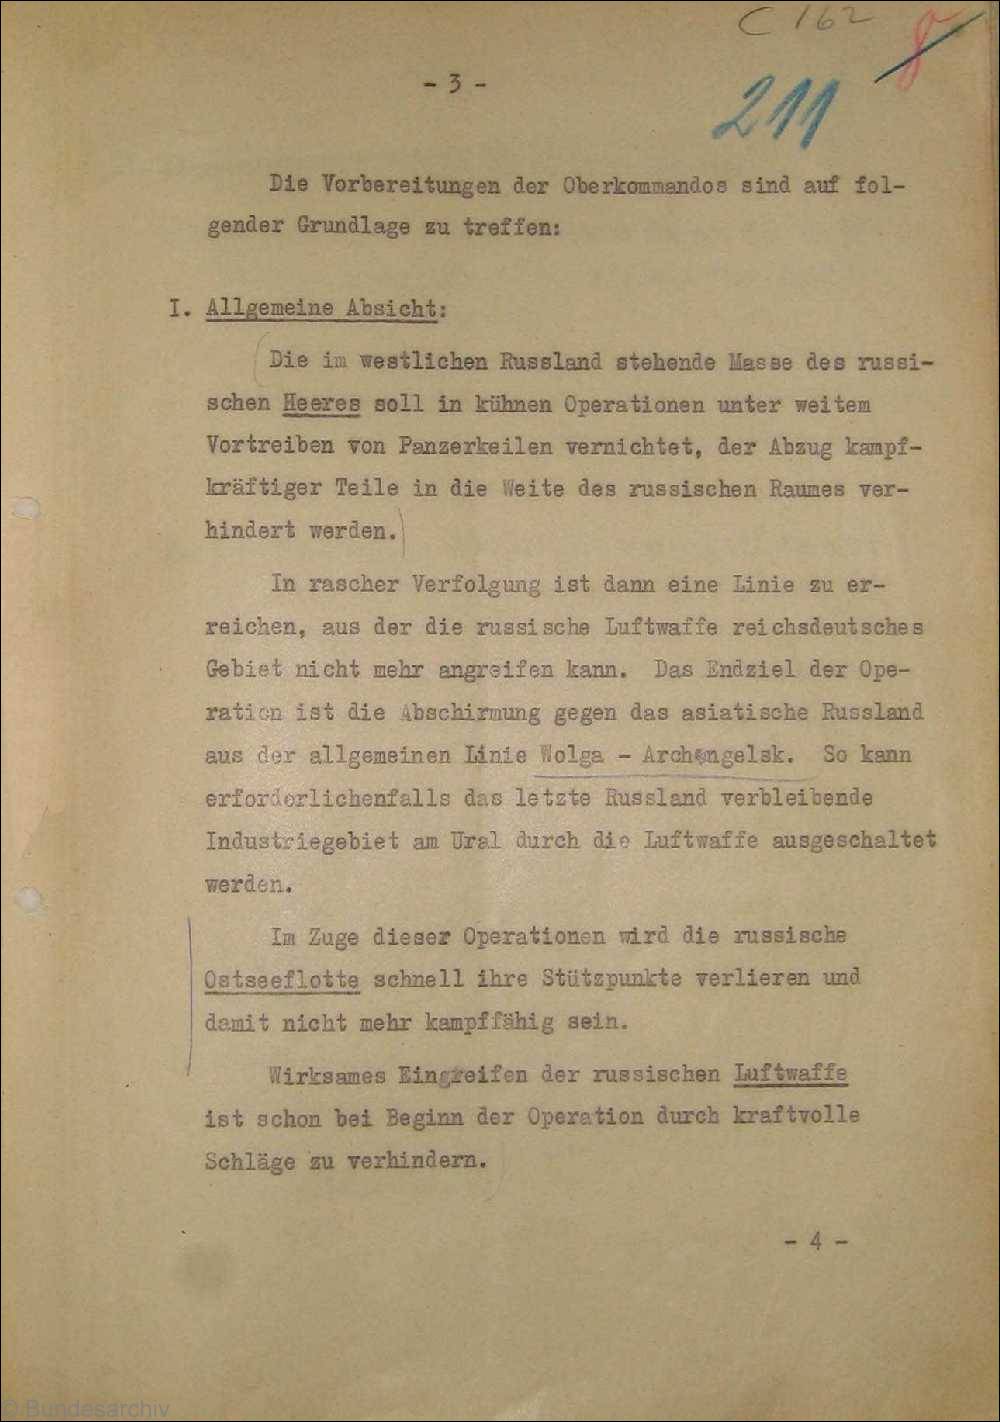 Directive No. 21 'Fall Barbarossa', 18 Dec 1940, page 3 of 9